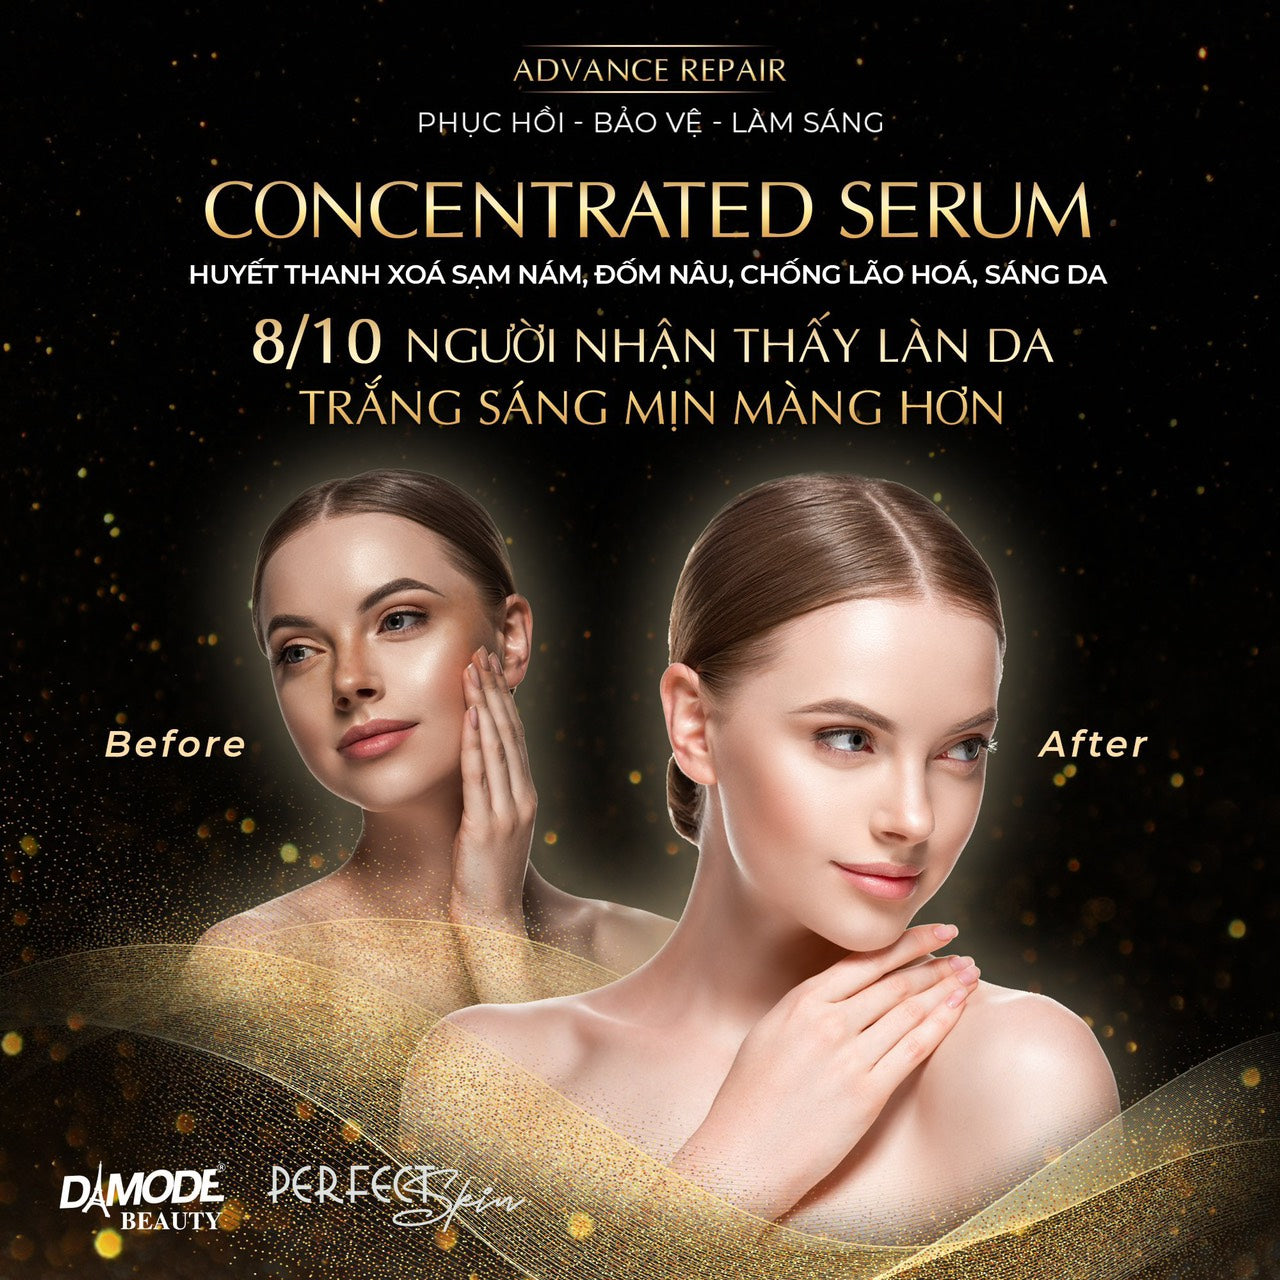 Damode Perfect Skin Advance Repair Concentrated Serum - 30ml